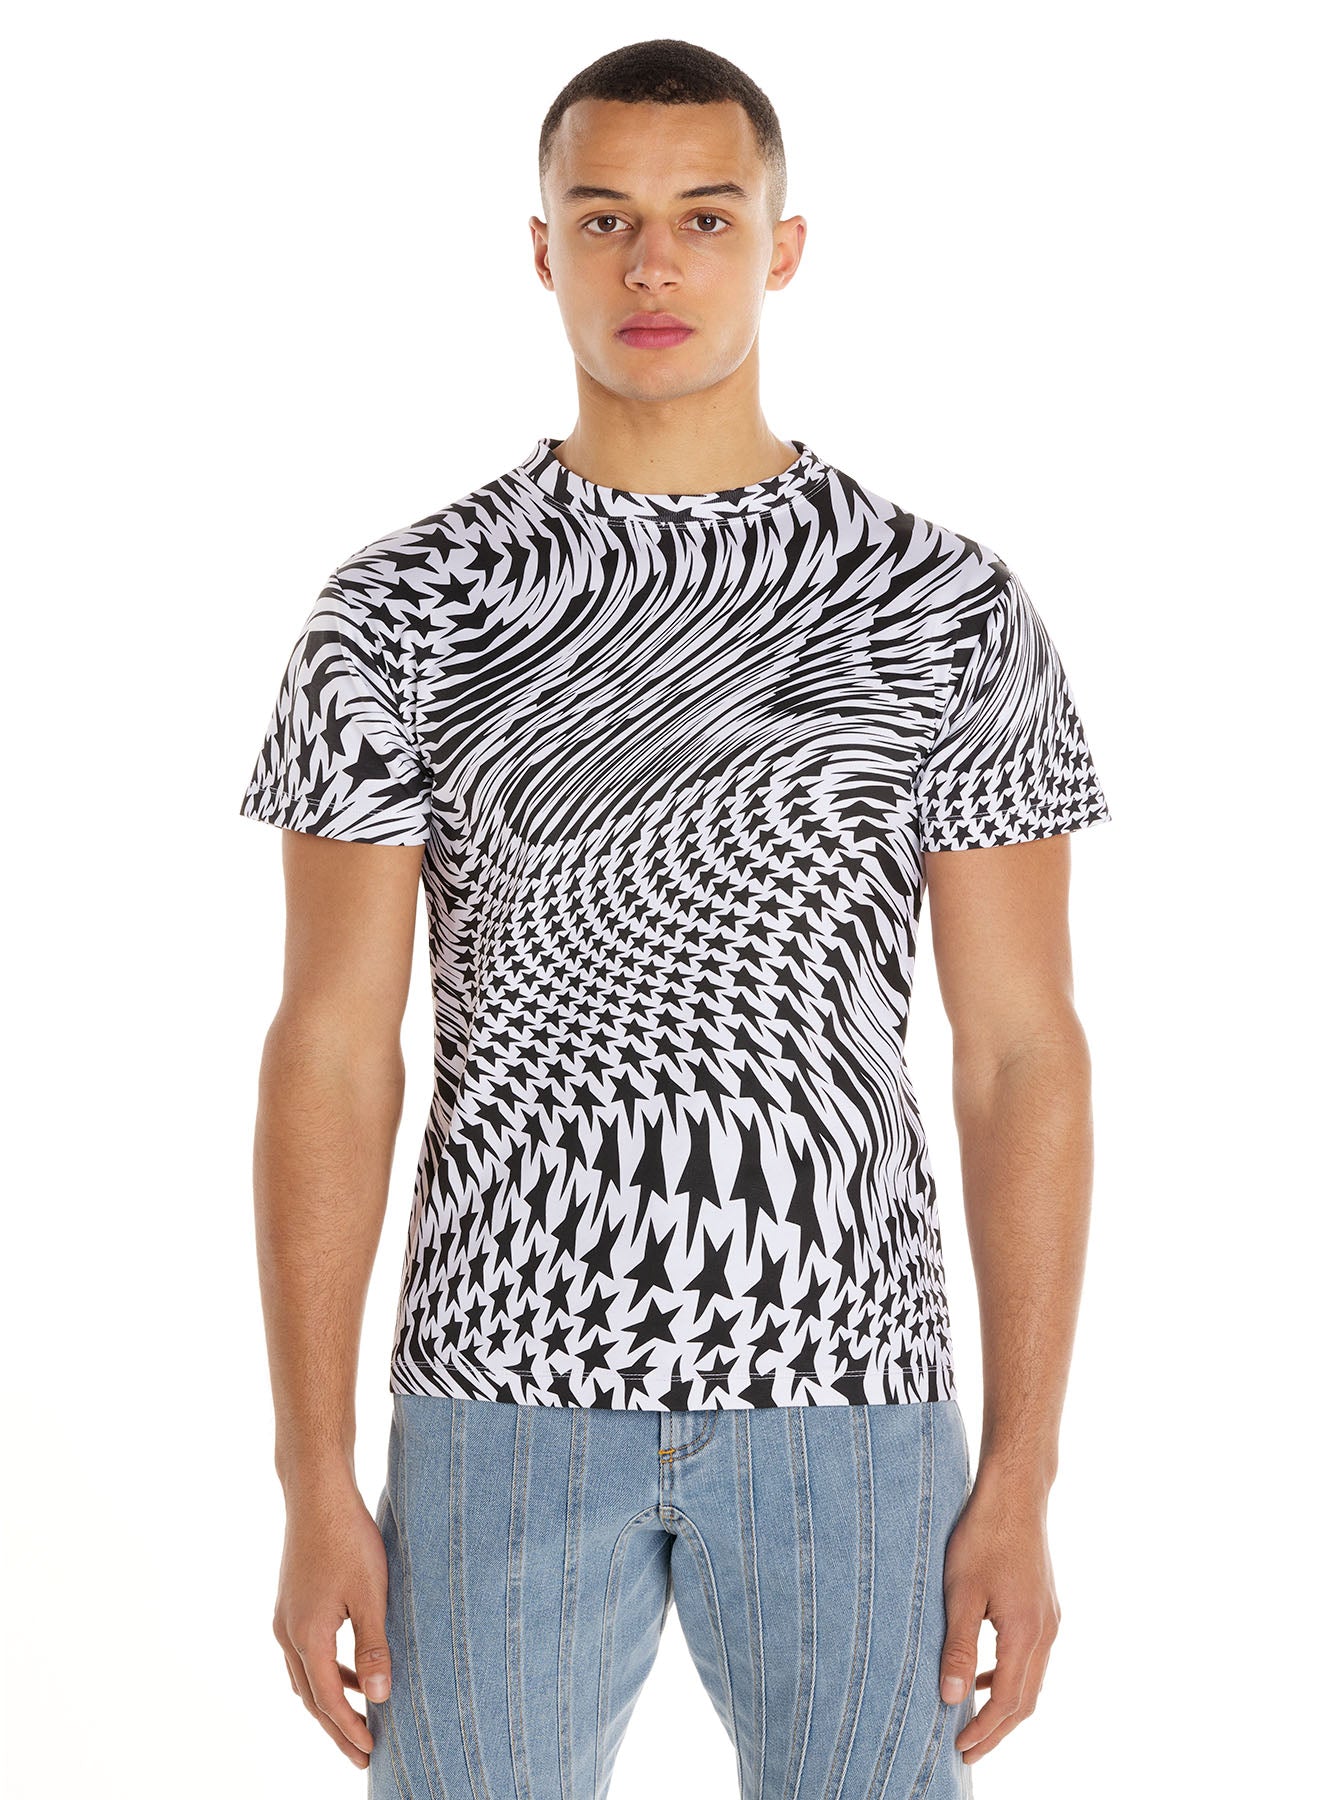 Swirling star printed T-shirt